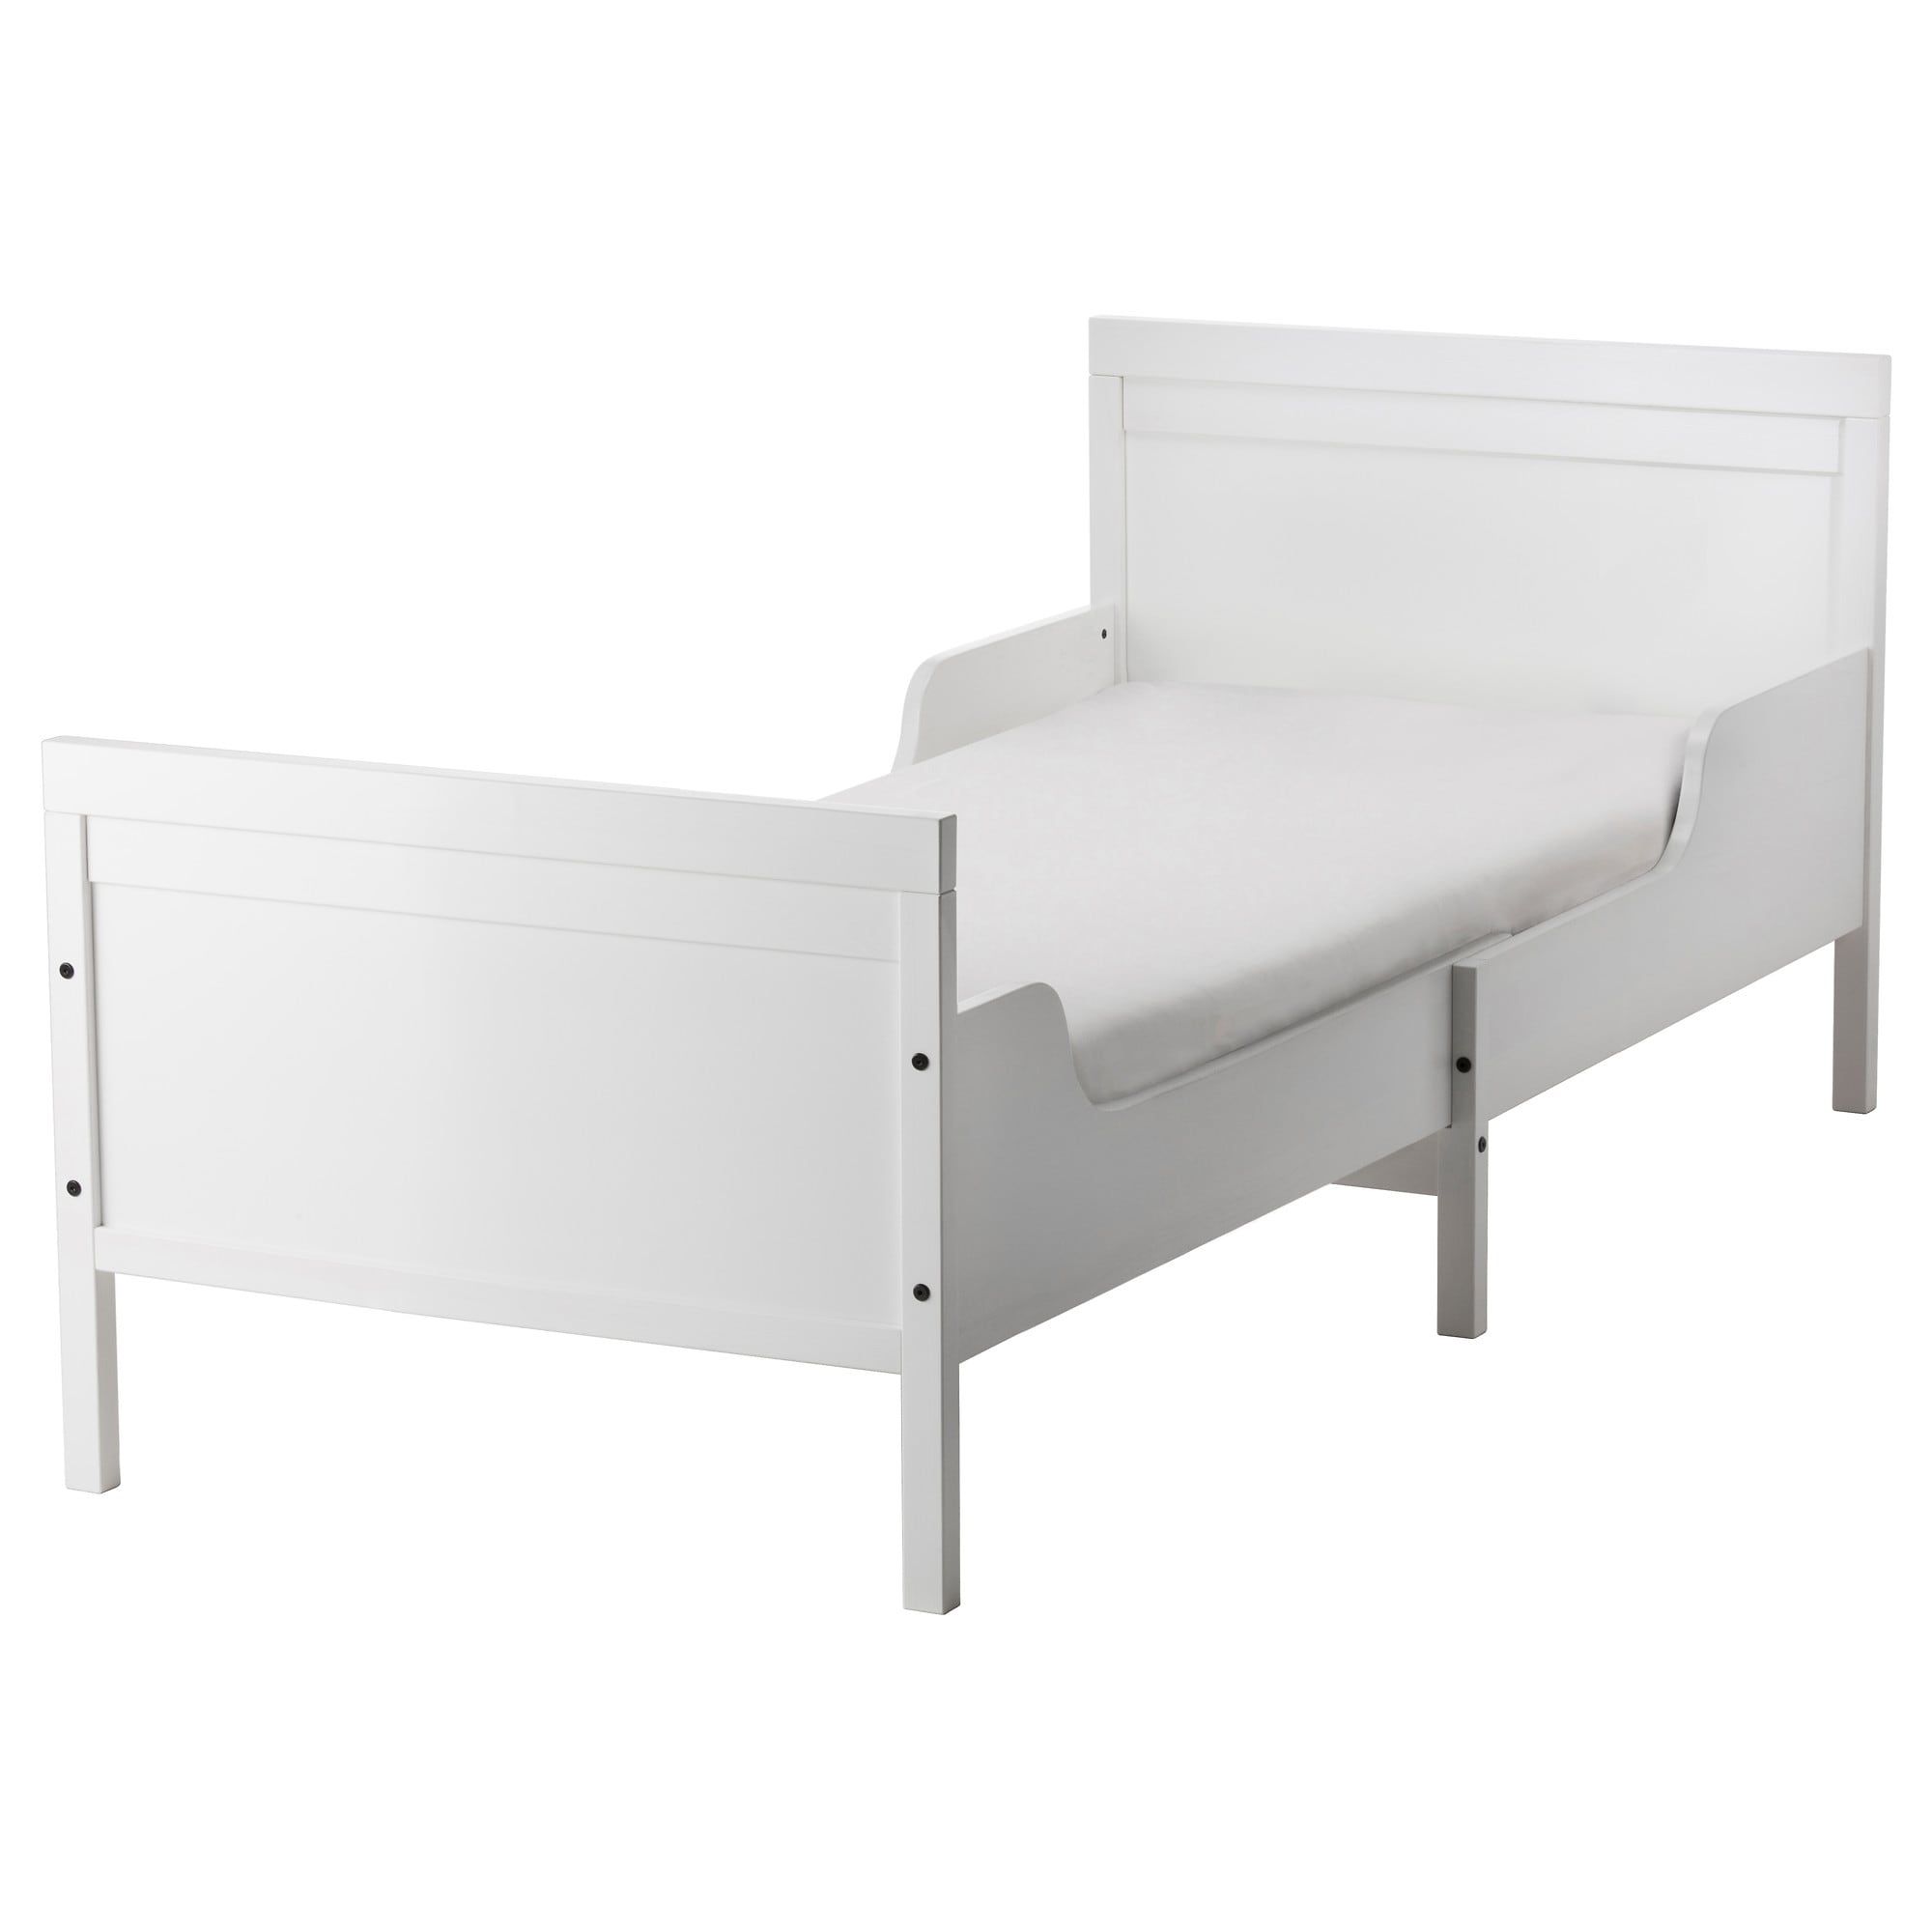 SUNDVIK Ext bed frame with slatted bed base, white, 38 1 ...